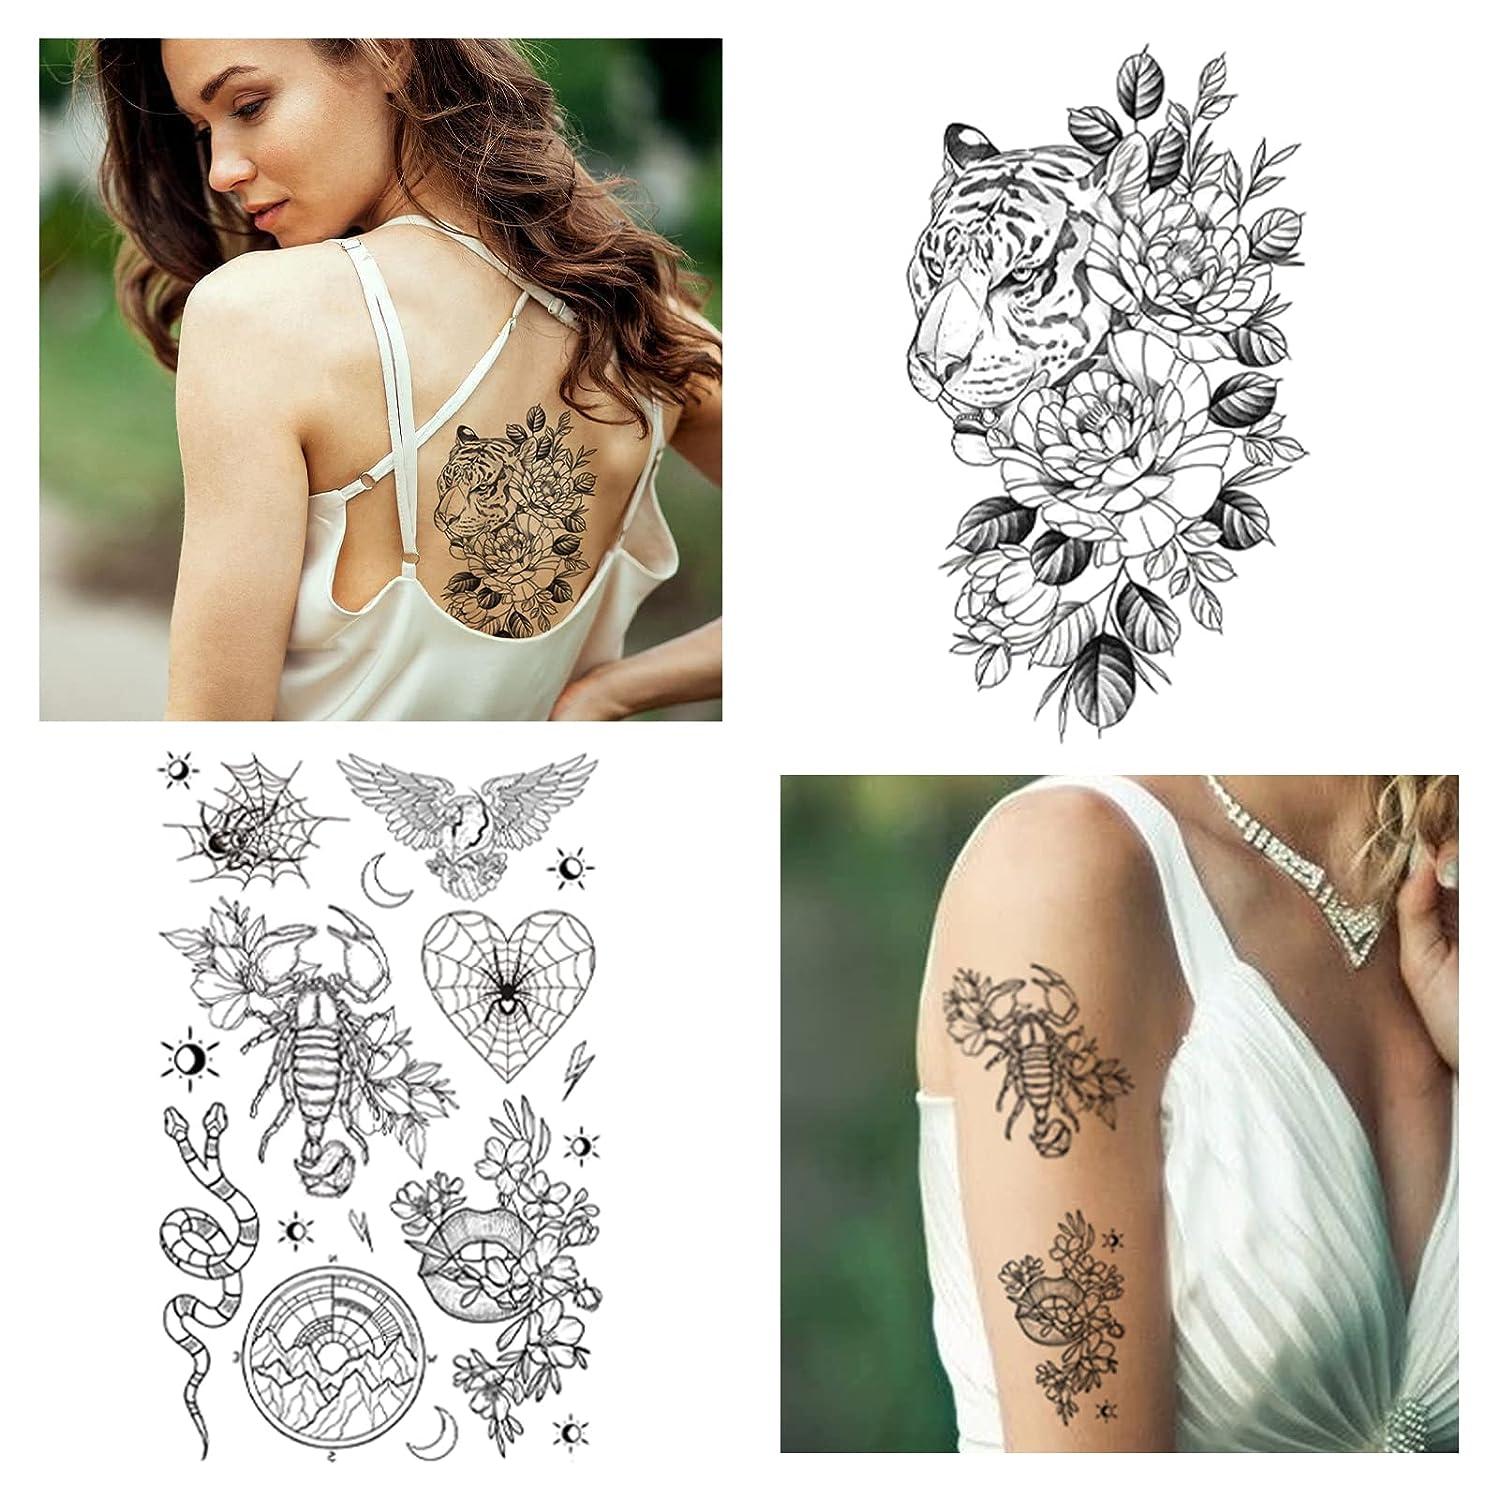 Hand Tattoos Do They Fade | Finger tattoos fade, Hand tattoos for women,  Hand tattoos